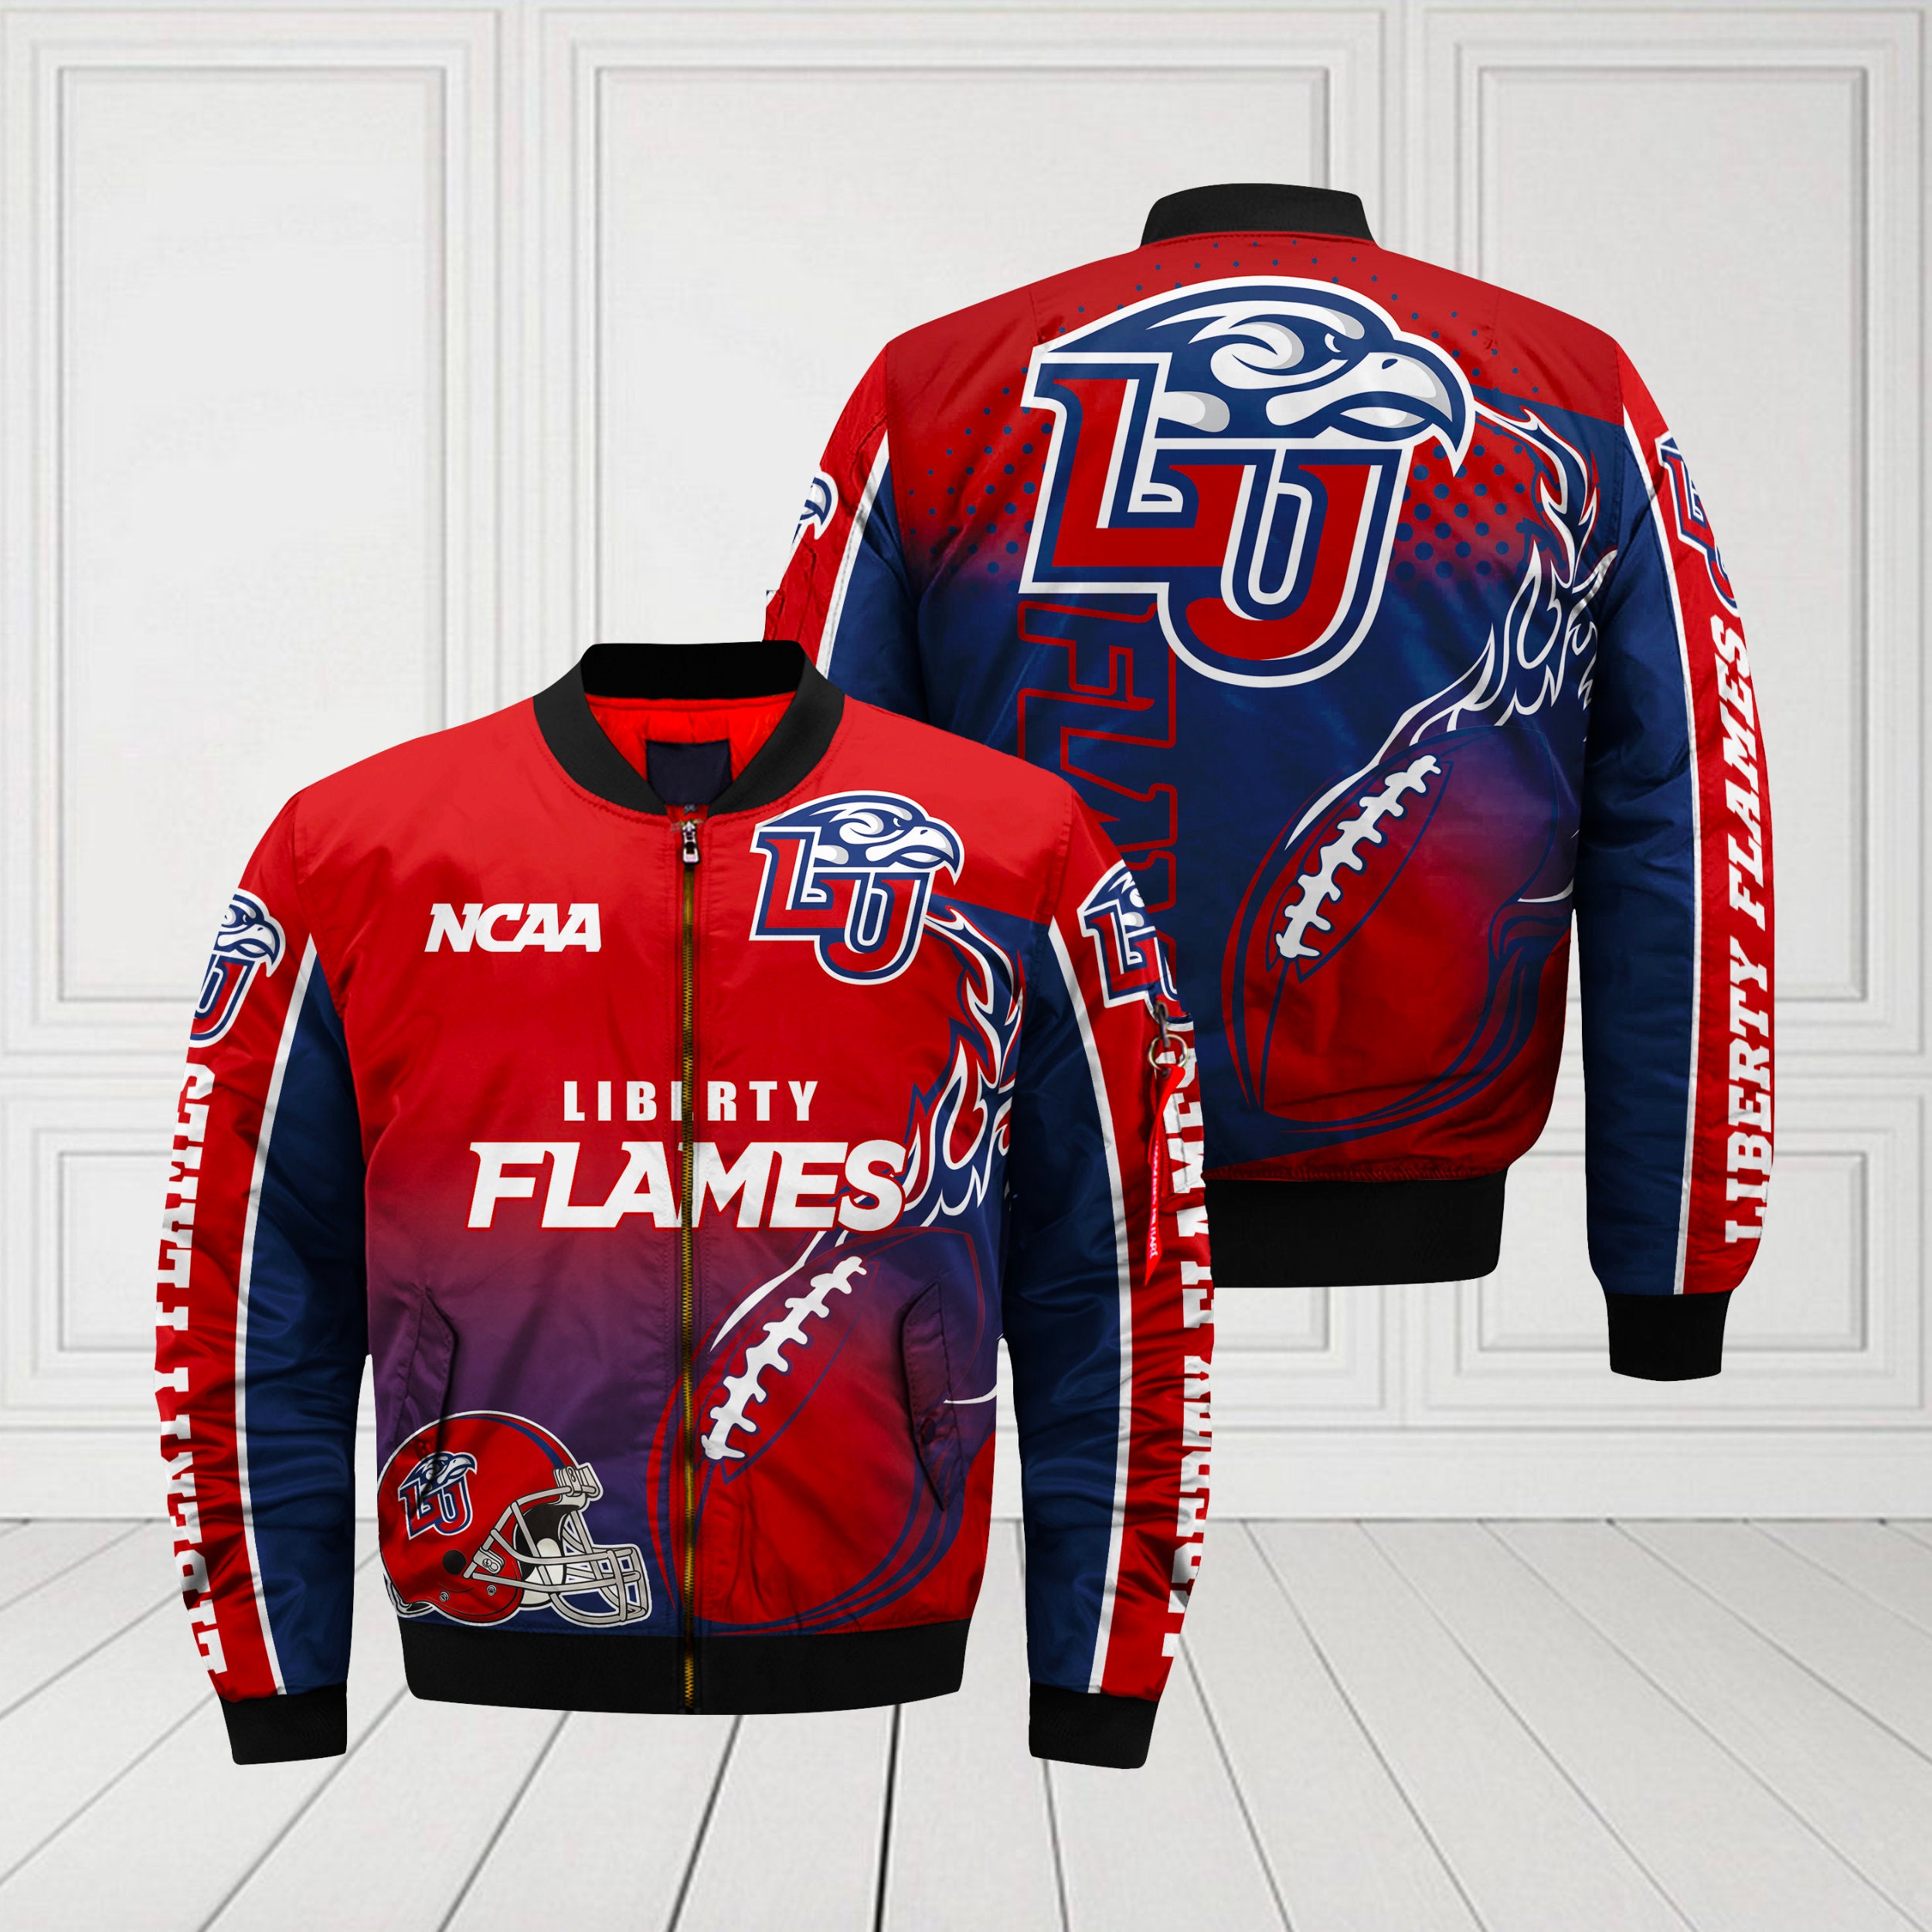 NCAA Liberty Flames Bomber Jacket All Printed 3D Full 3D | Etsy